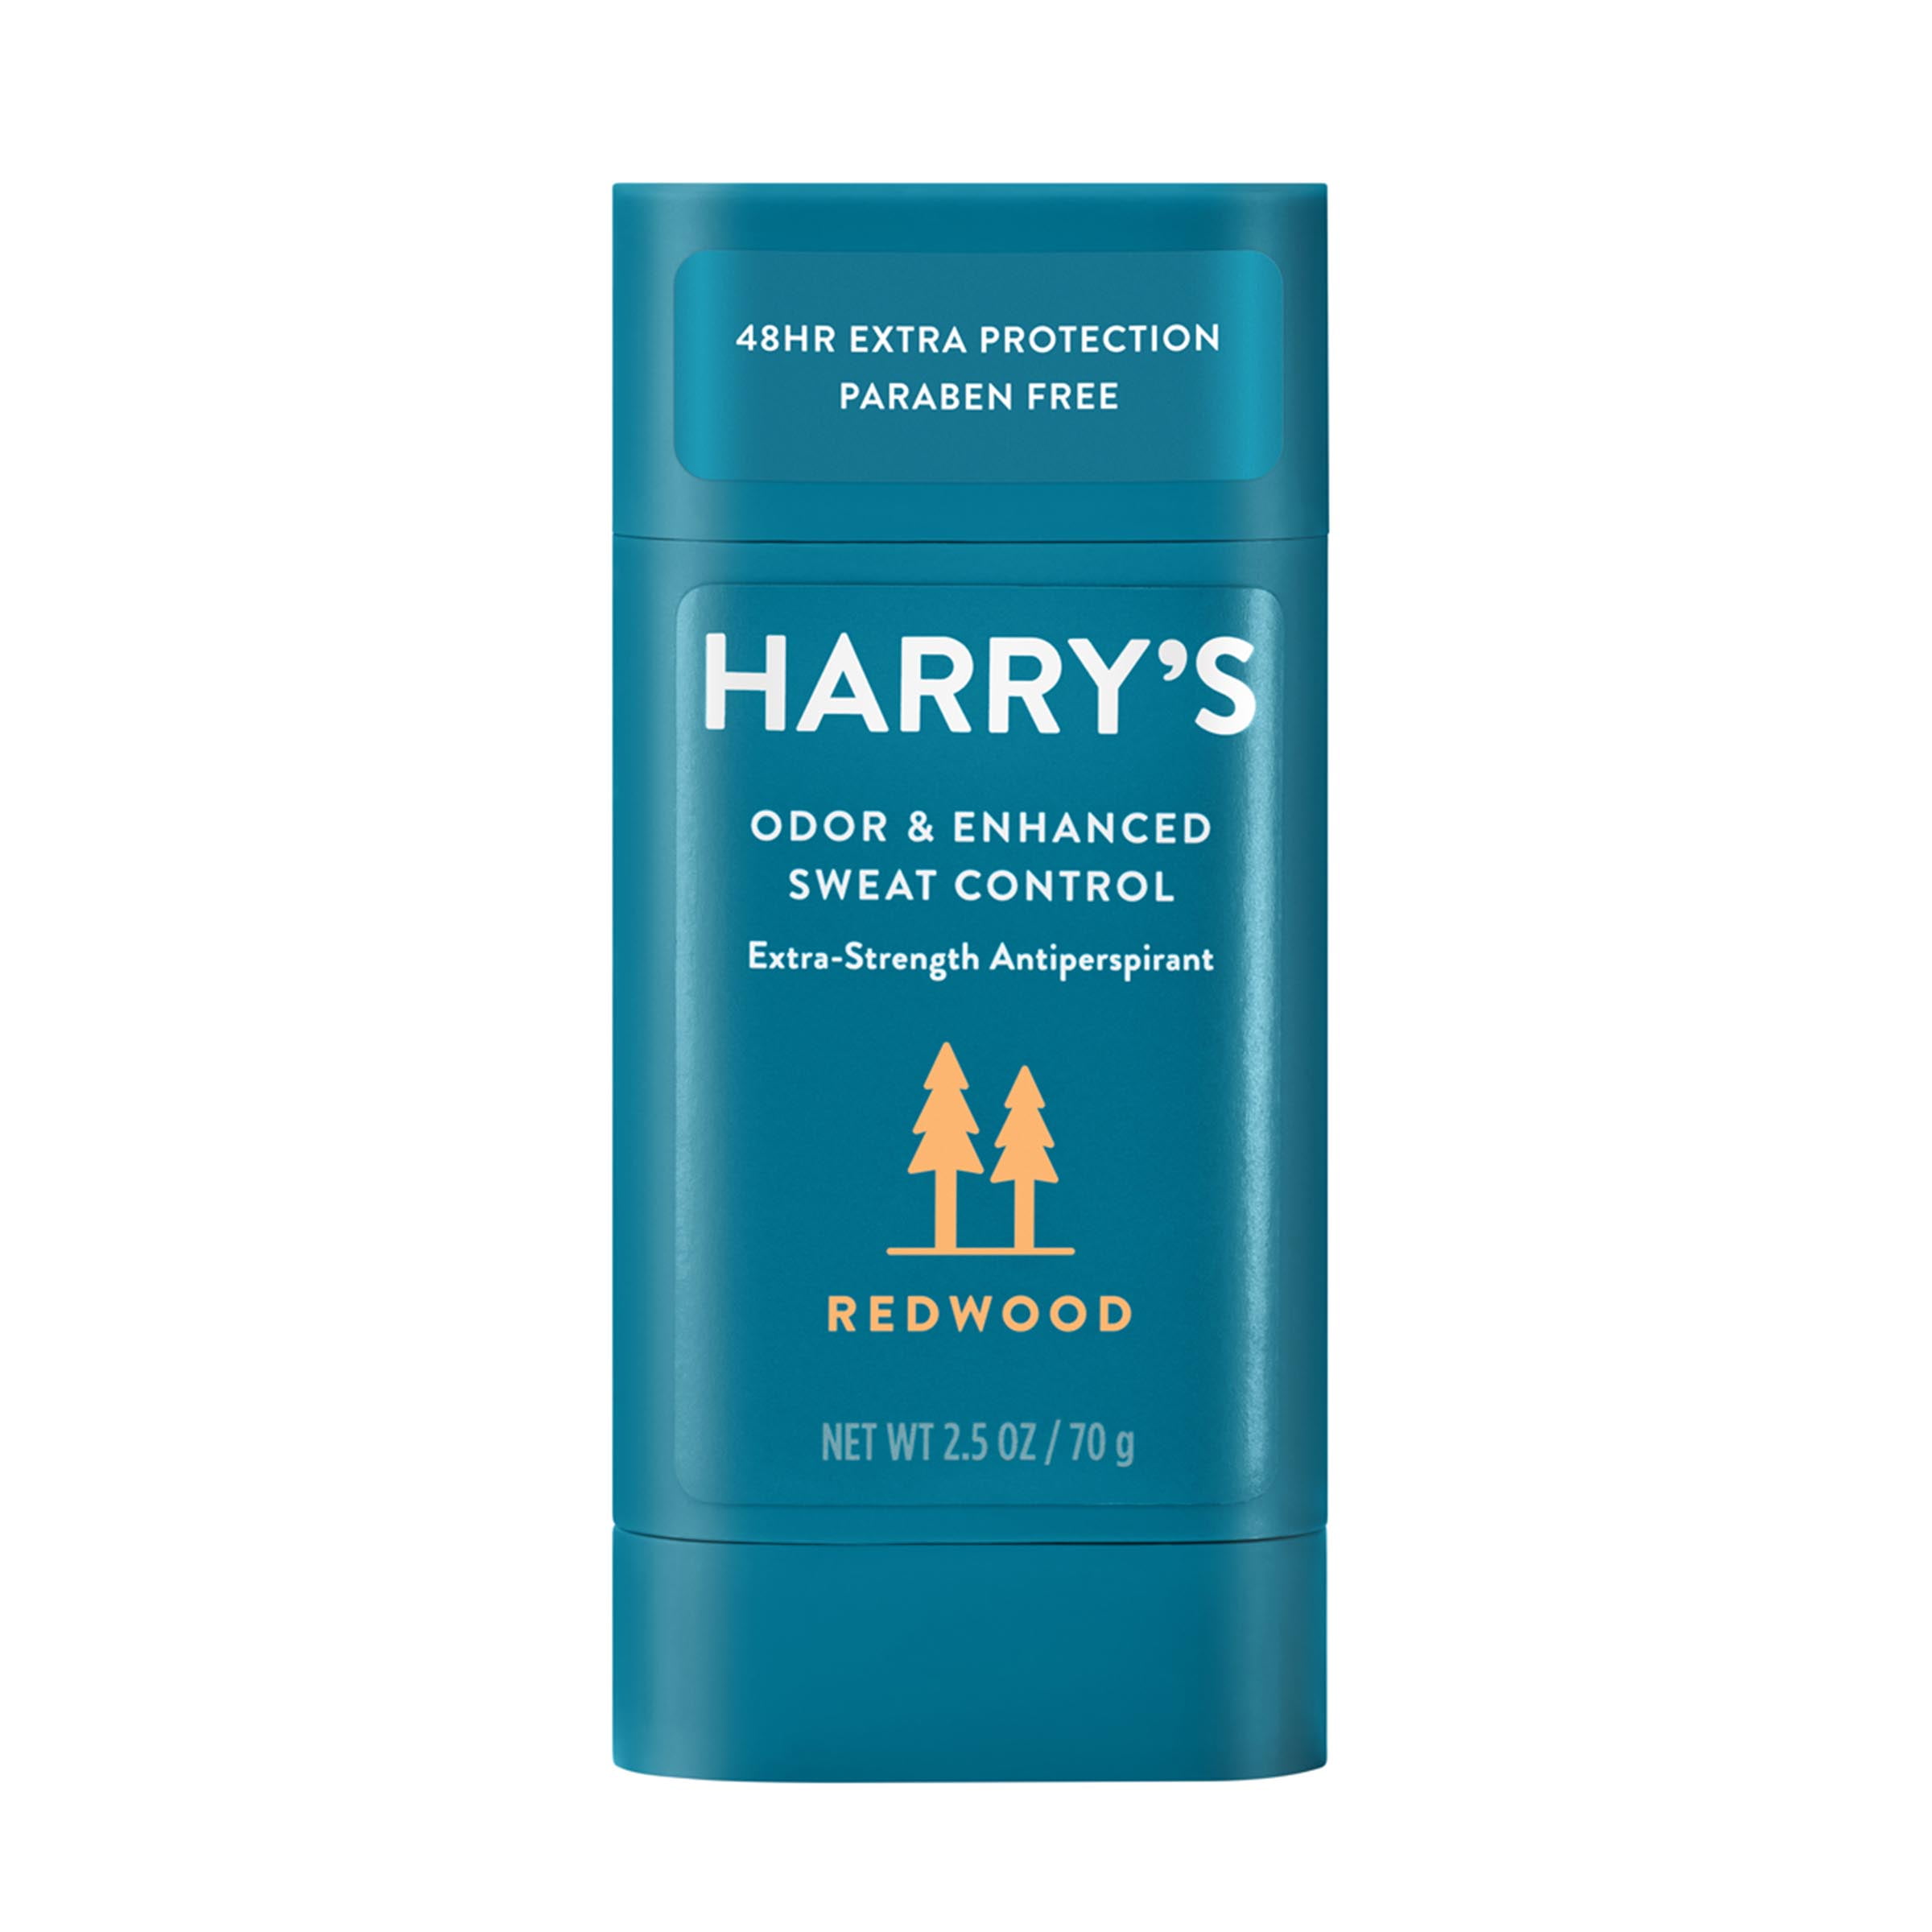 Harry's Men's Odor and Sweat Control Extra-Strength Antiperspirant Deodorant Stick, Redwood Scent, 2.5 oz